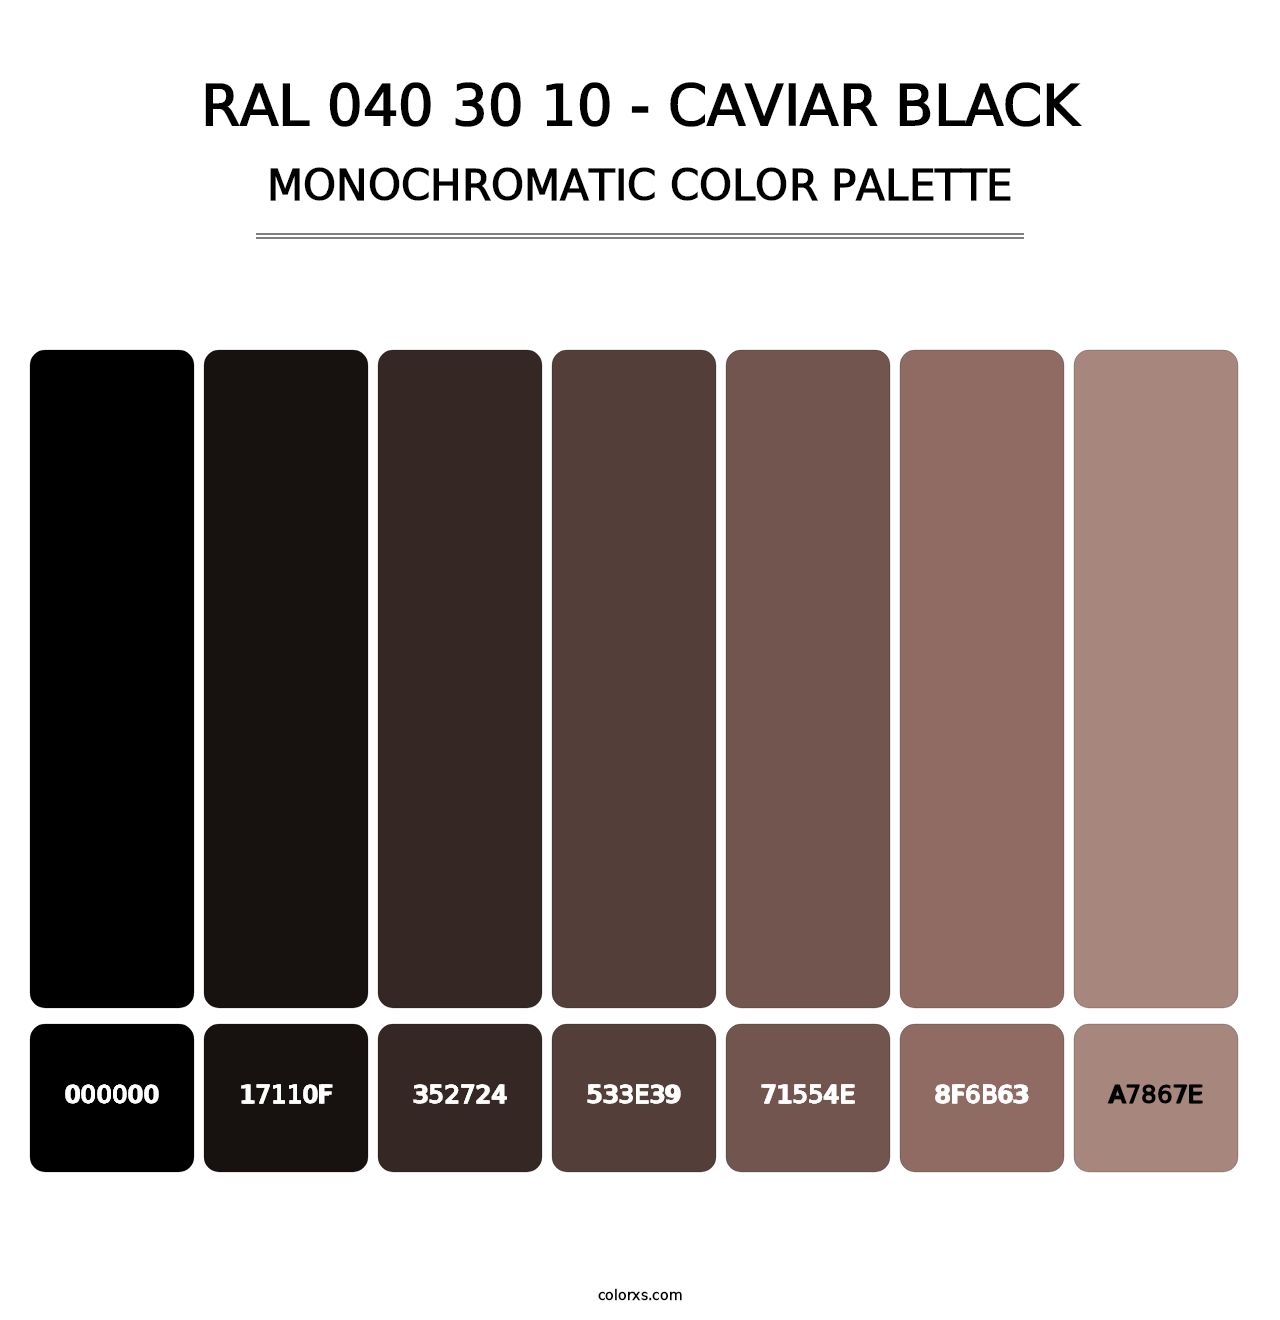 RAL 040 30 10 - Caviar Black - Monochromatic Color Palette